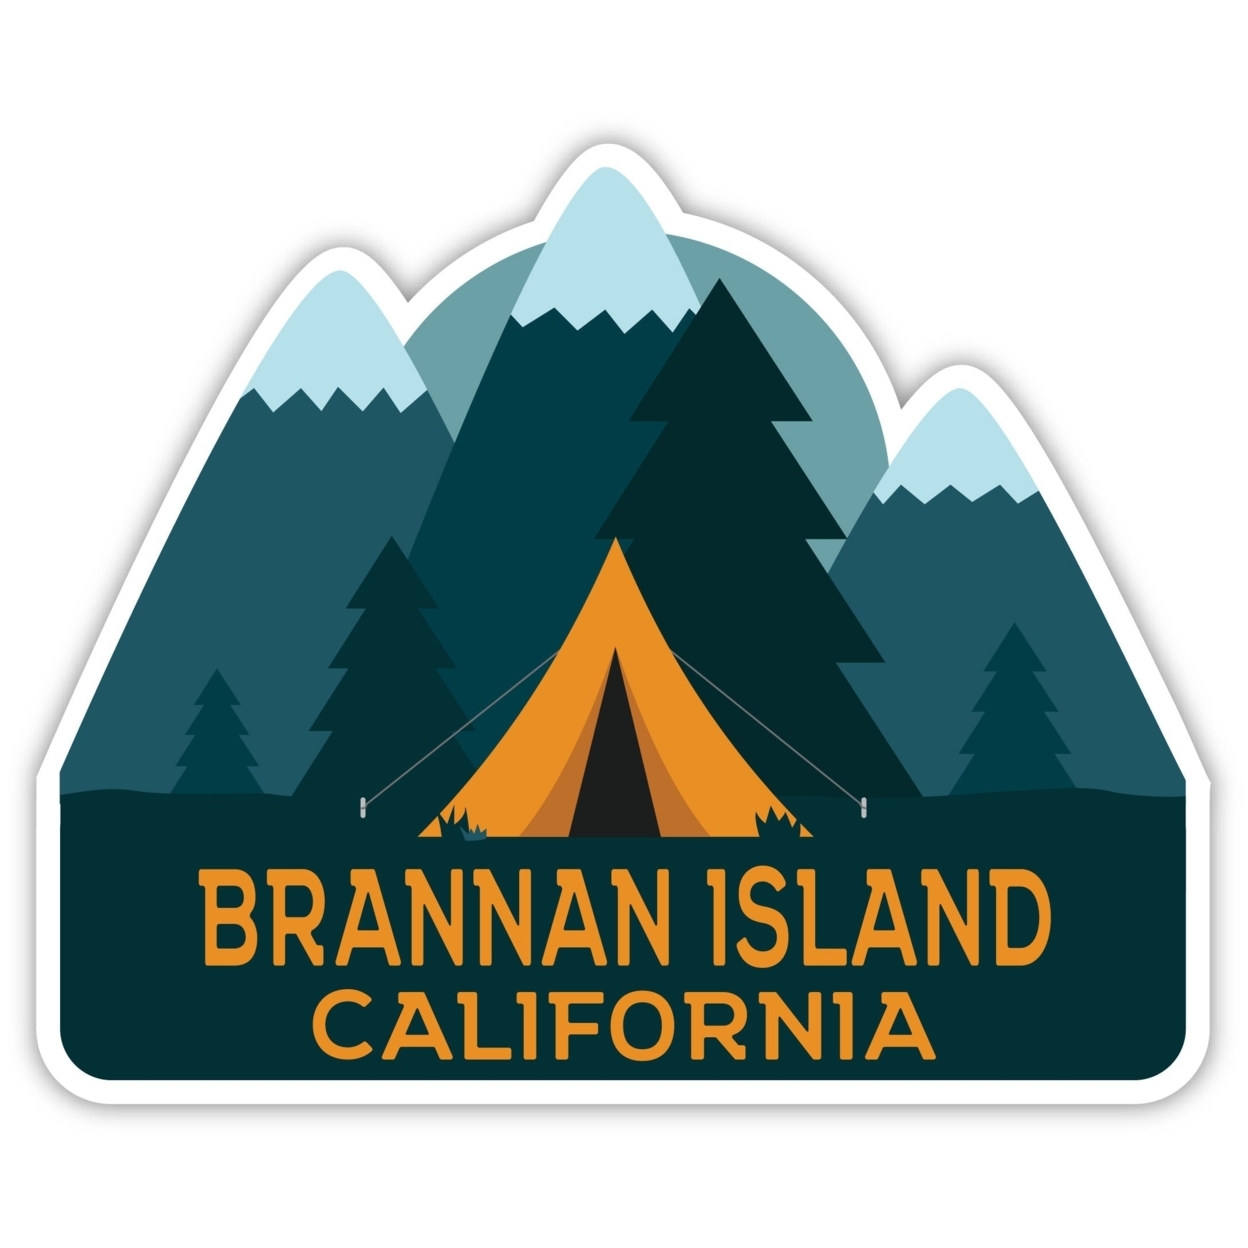 Brannan Island California Souvenir Decorative Stickers (Choose Theme And Size) - 4-Pack, 10-Inch, Tent